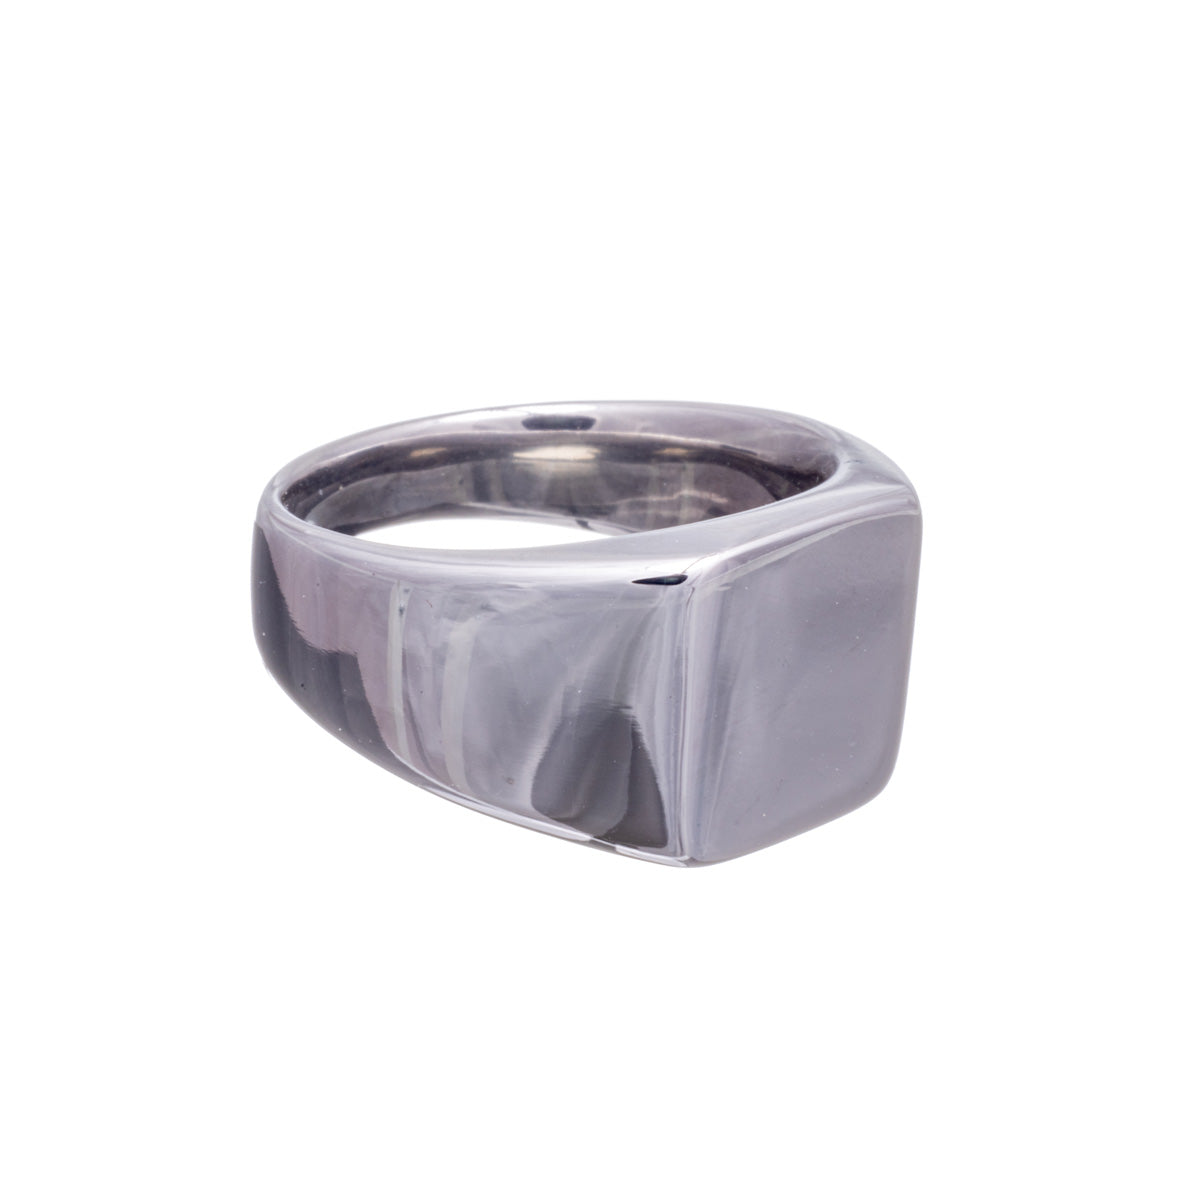 Polished steel wedding ring (Steel 316L)